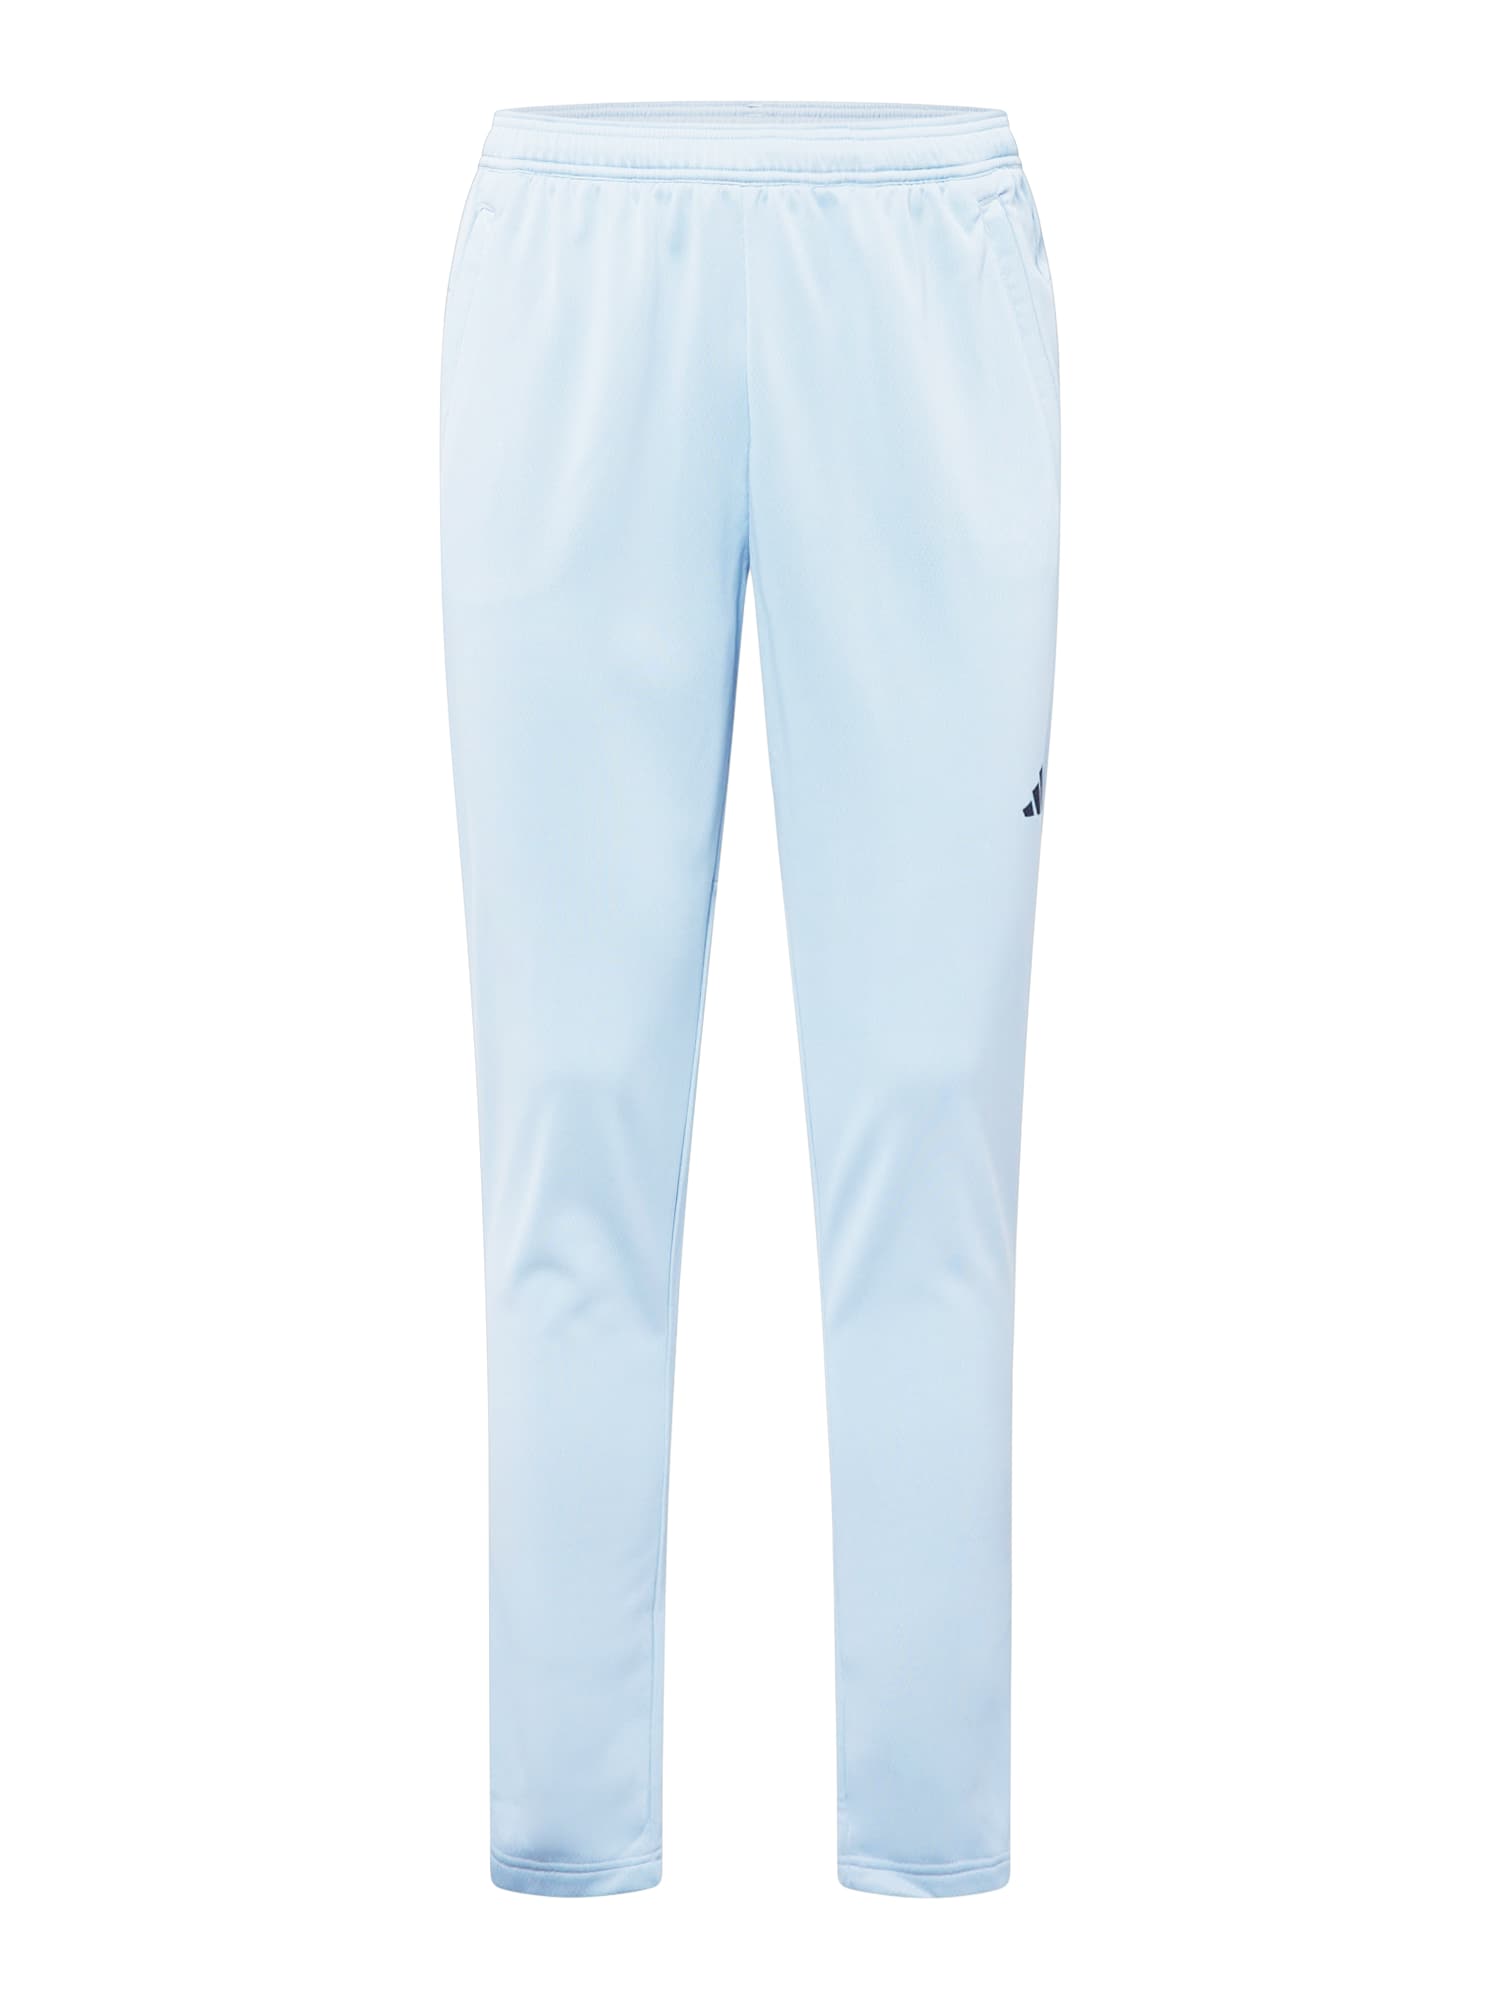 ADIDAS PERFORMANCE Športne hlače 'Train Essentials Seasonal '  nočno modra / opal